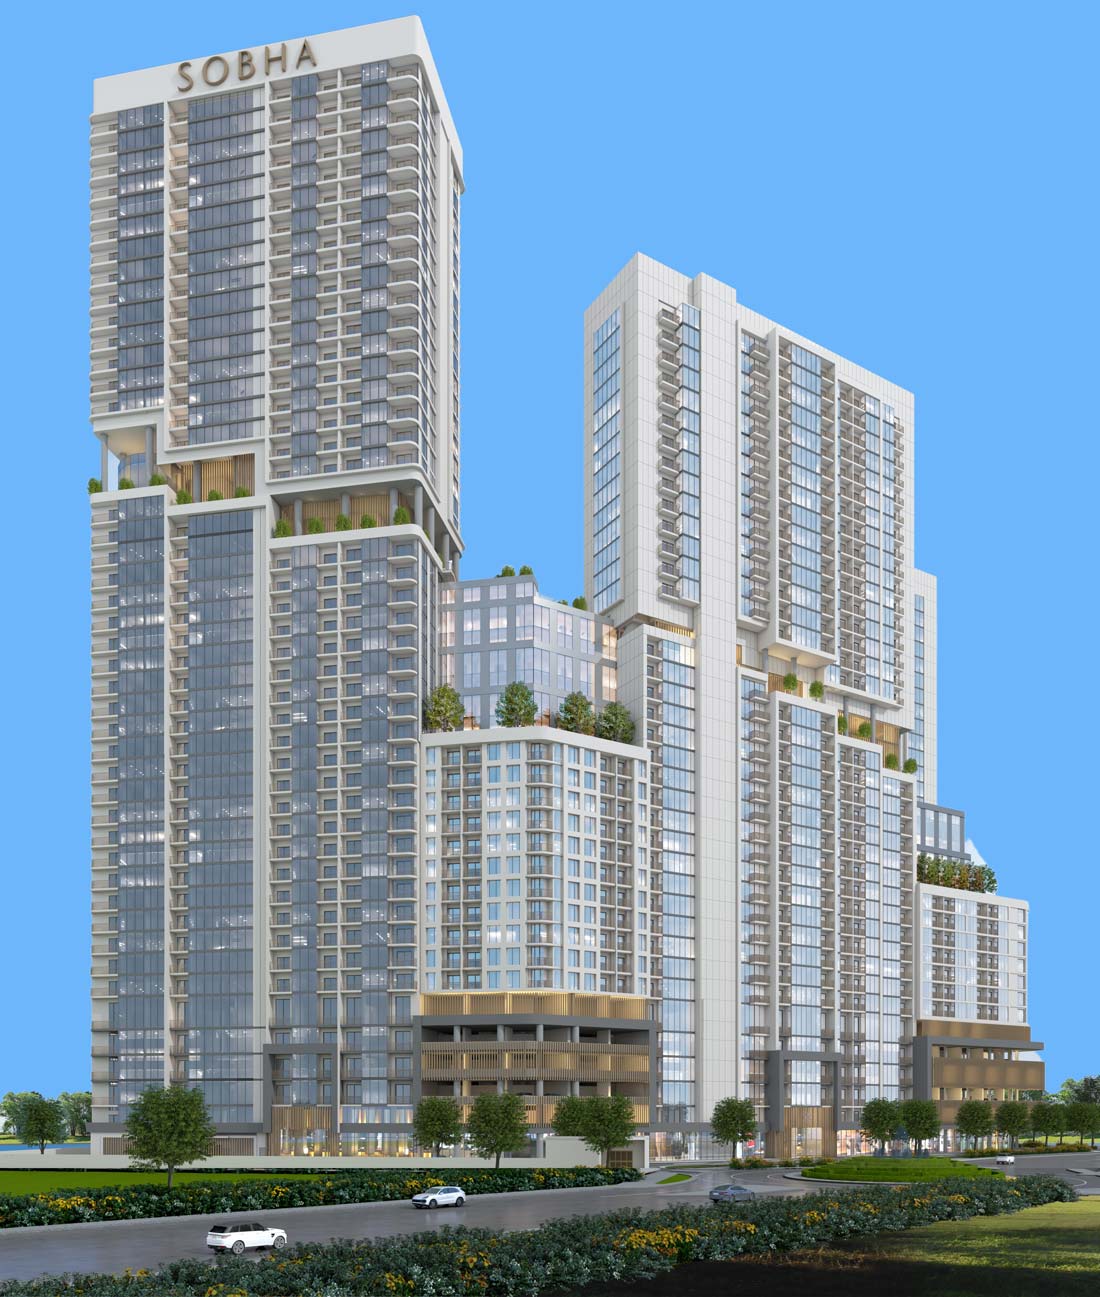 Real Estate in the Sobha Hartland area in Mohammed Bin Rashid City (MBR City), Dubai | Buy Real Estate from Developer